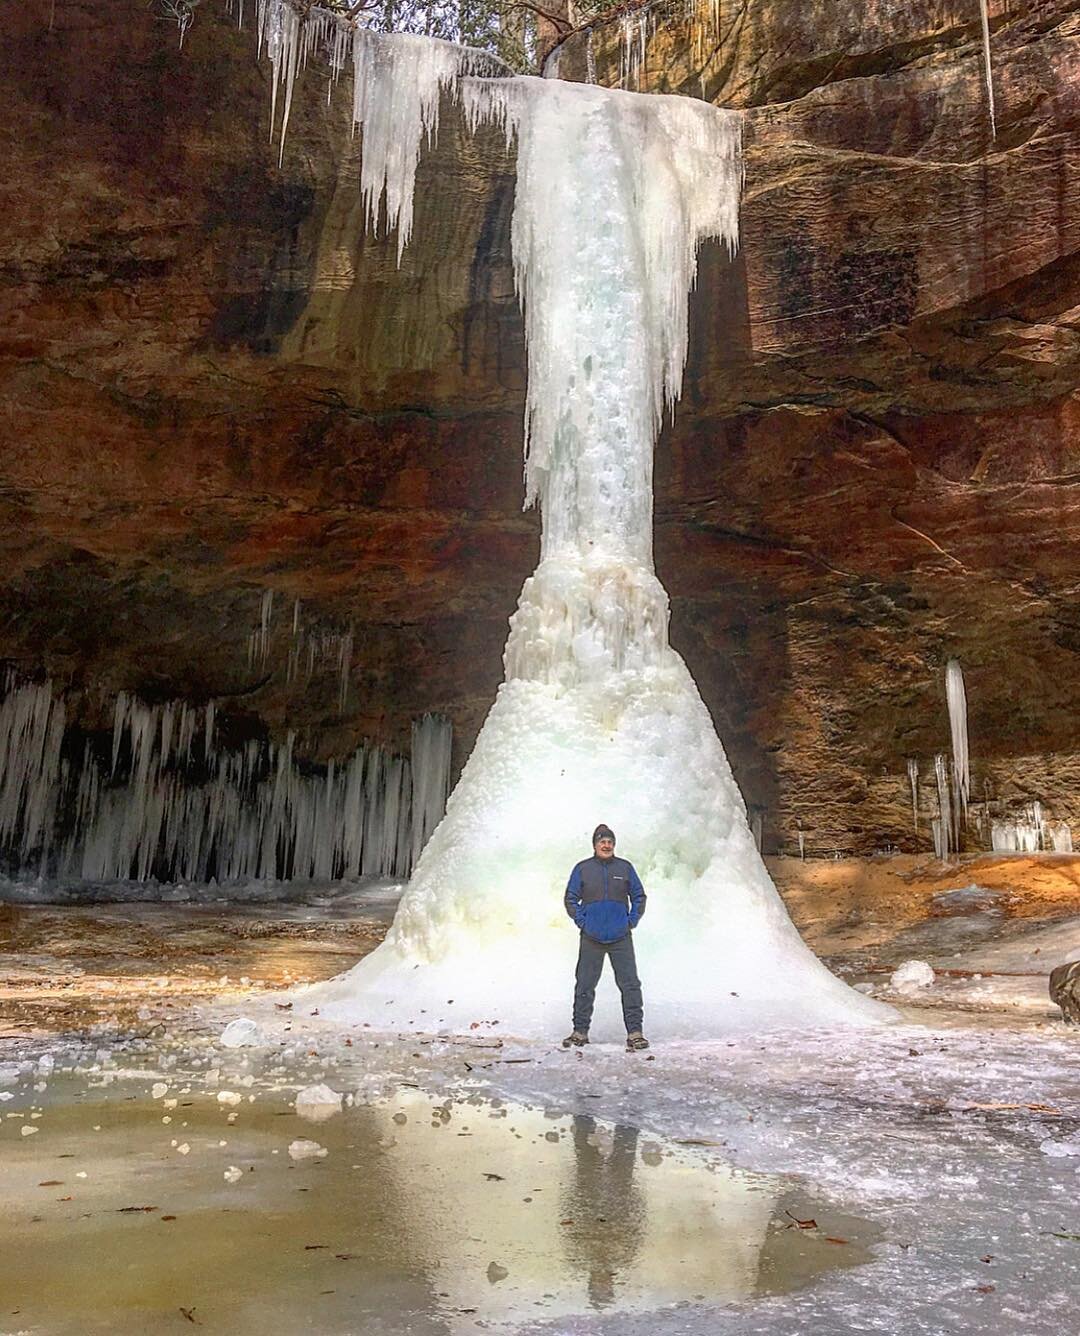 Chasing frozen waterfall photos .
.
.
.
.
#waterfall #frozenwaterfall #copperasfalls #redrivergorge #rrg #travelky #ice #naturephotography #reflection_shotz #kentuckyforkentucky  #kyproud #hiking #kywx #mysouthernliving #bluegrass #sharethelex #shopl